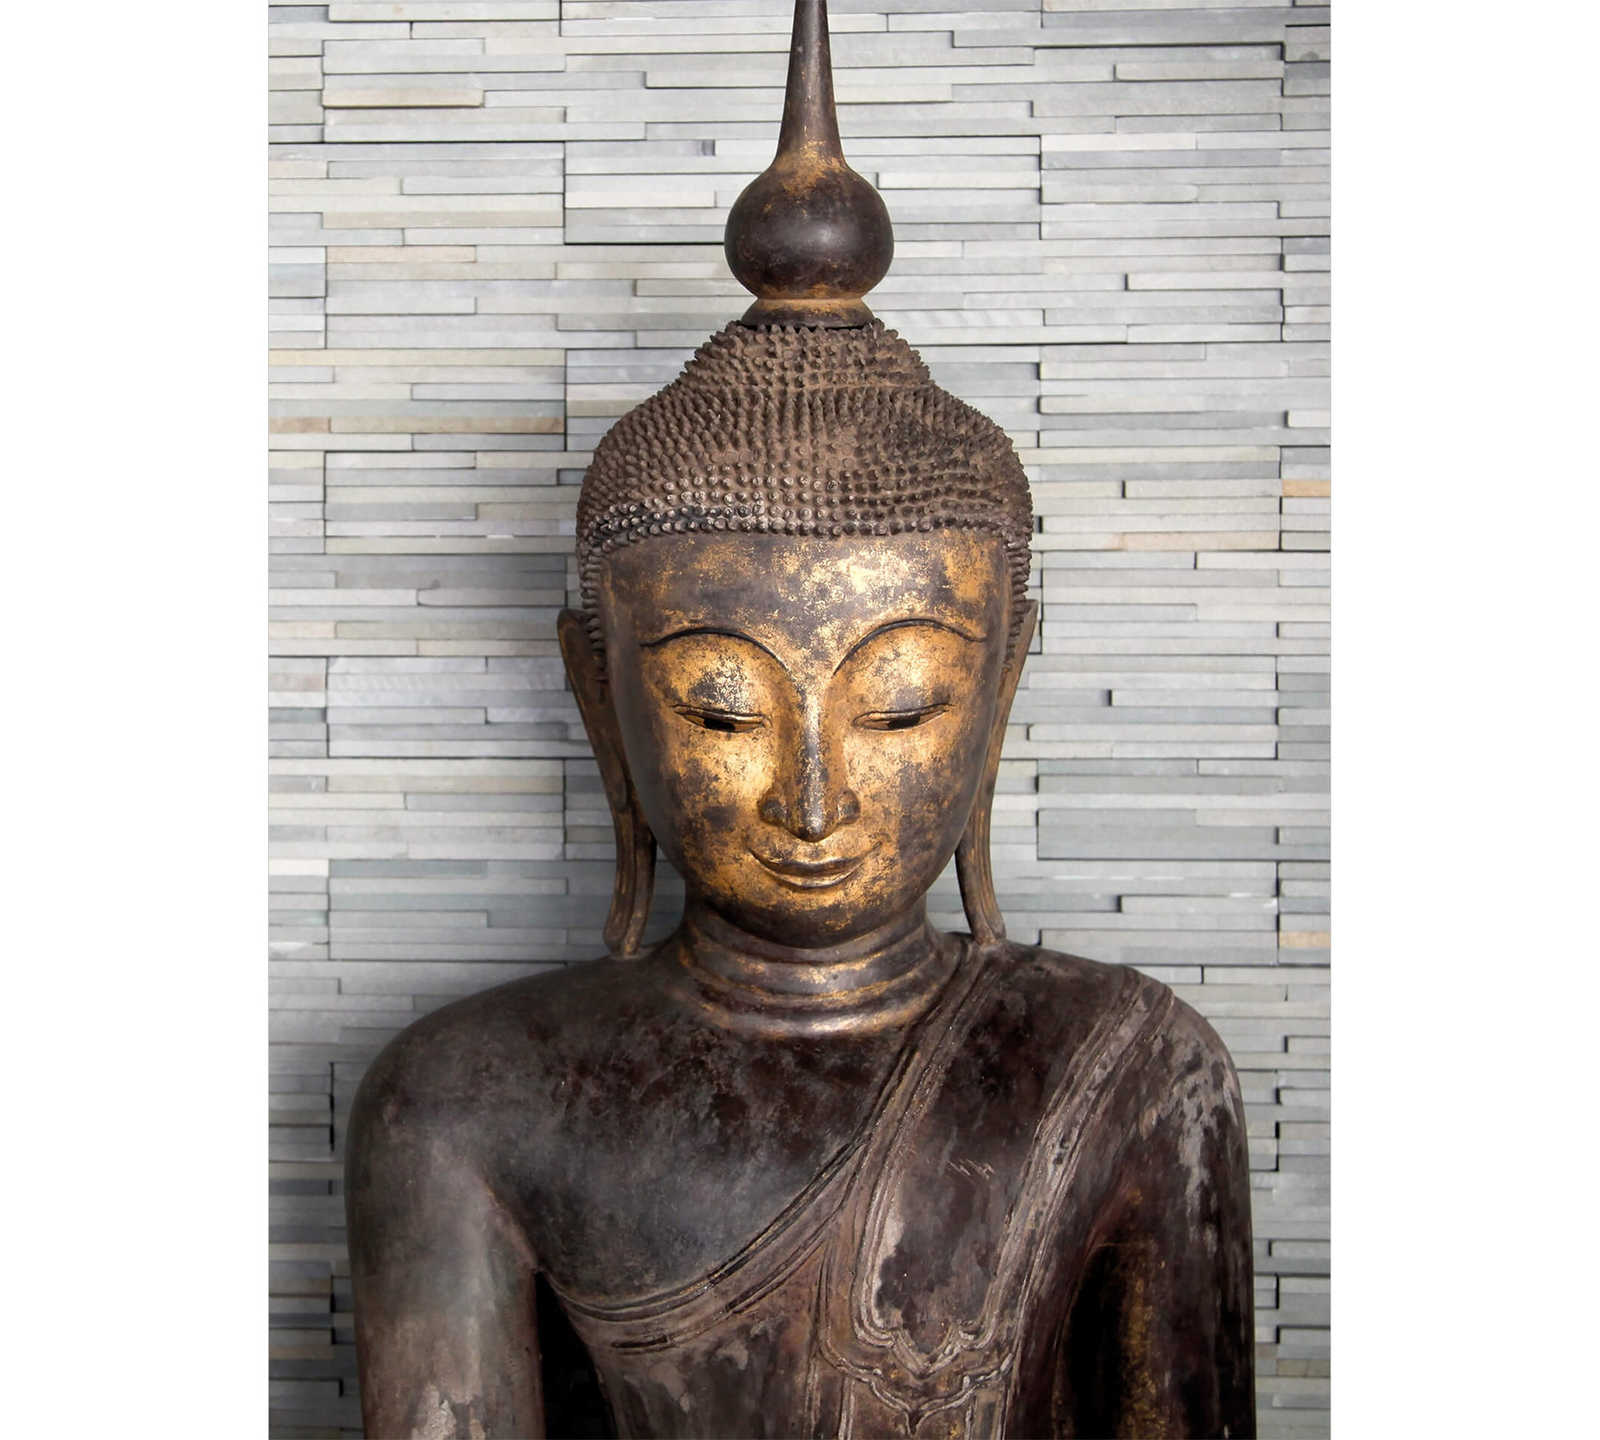 Fototapete schmal mit Buddha – Braun, Grau
